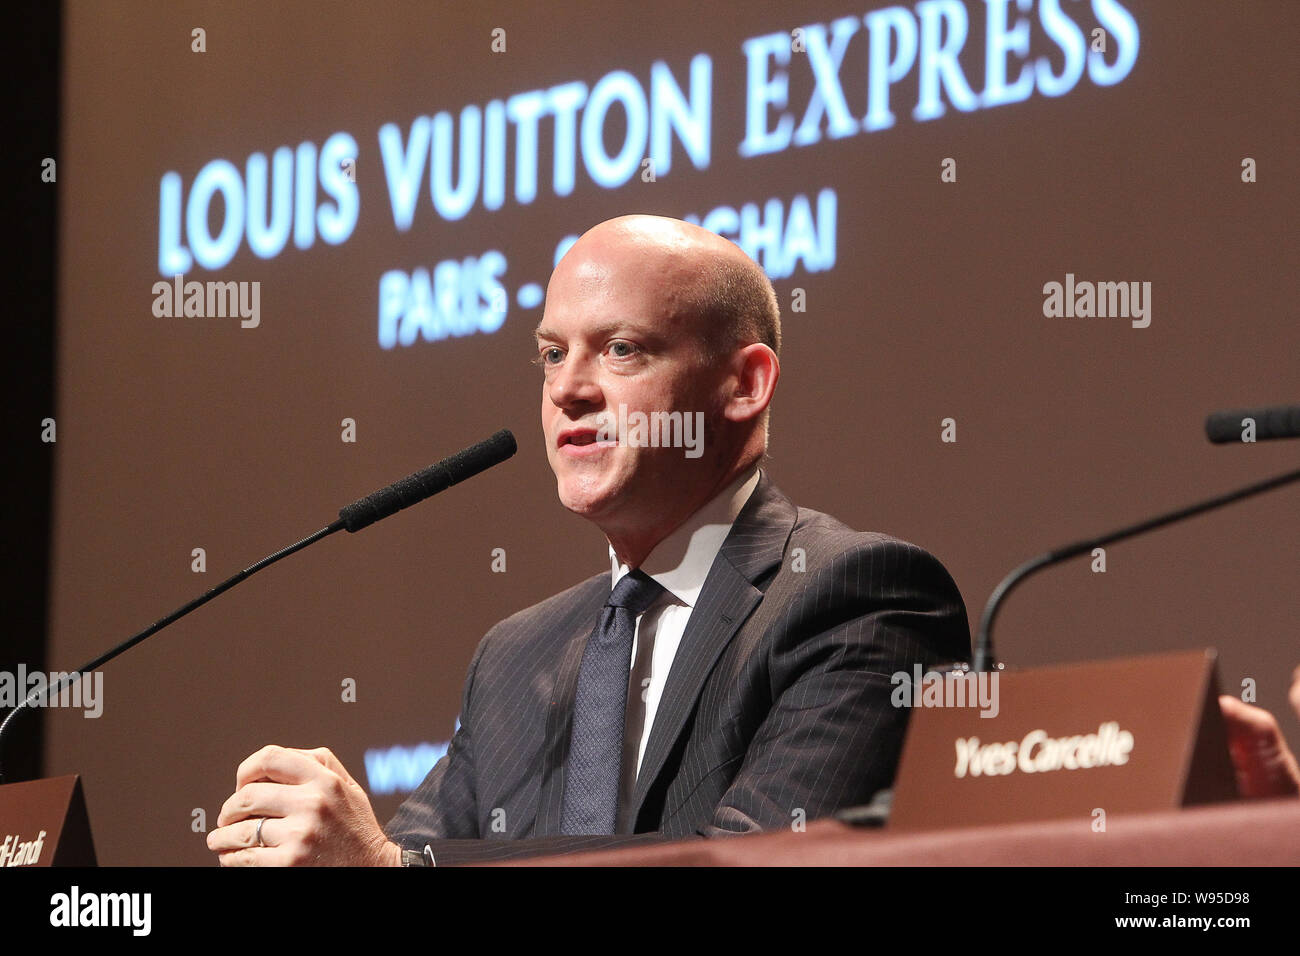 Louis Vuitton Express: From Paris To Shanghai